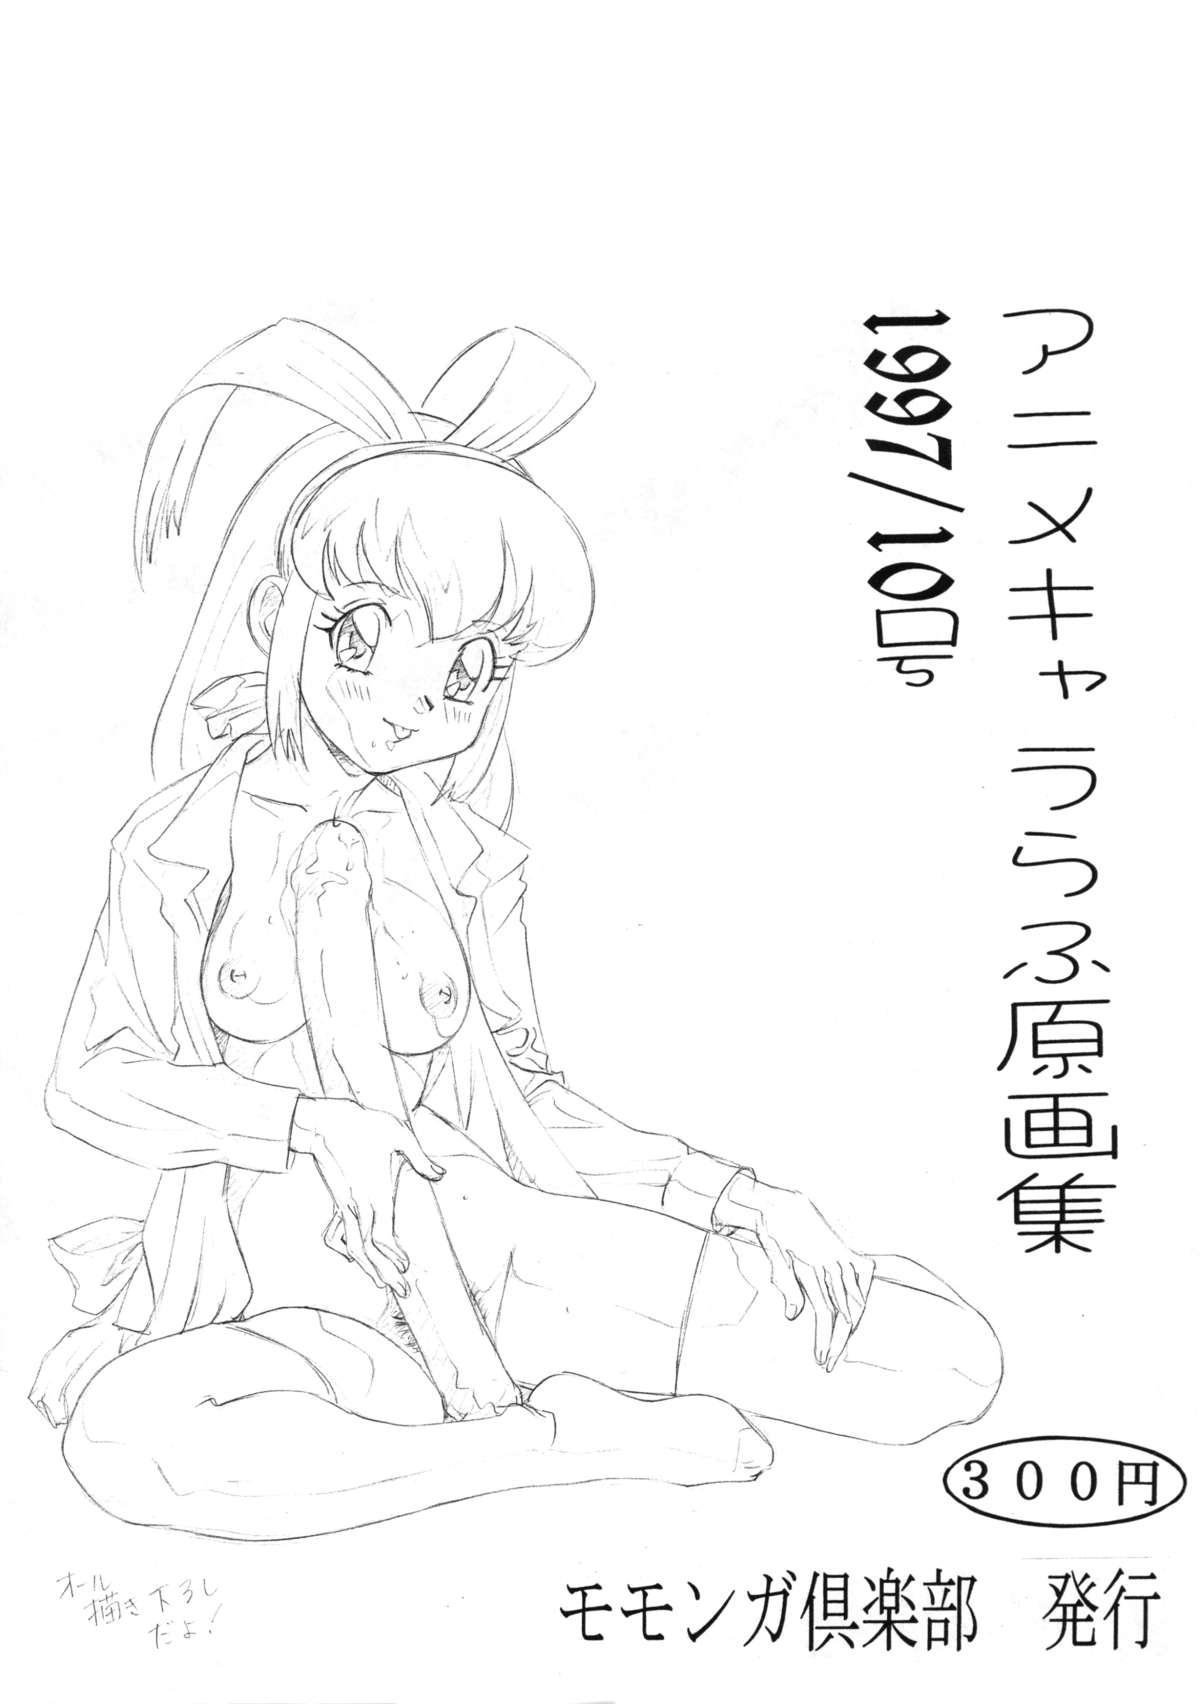 Playing Anime Kyararafu Original Collection 1997/10 Issue - Urusei yatsura Nude - Page 1